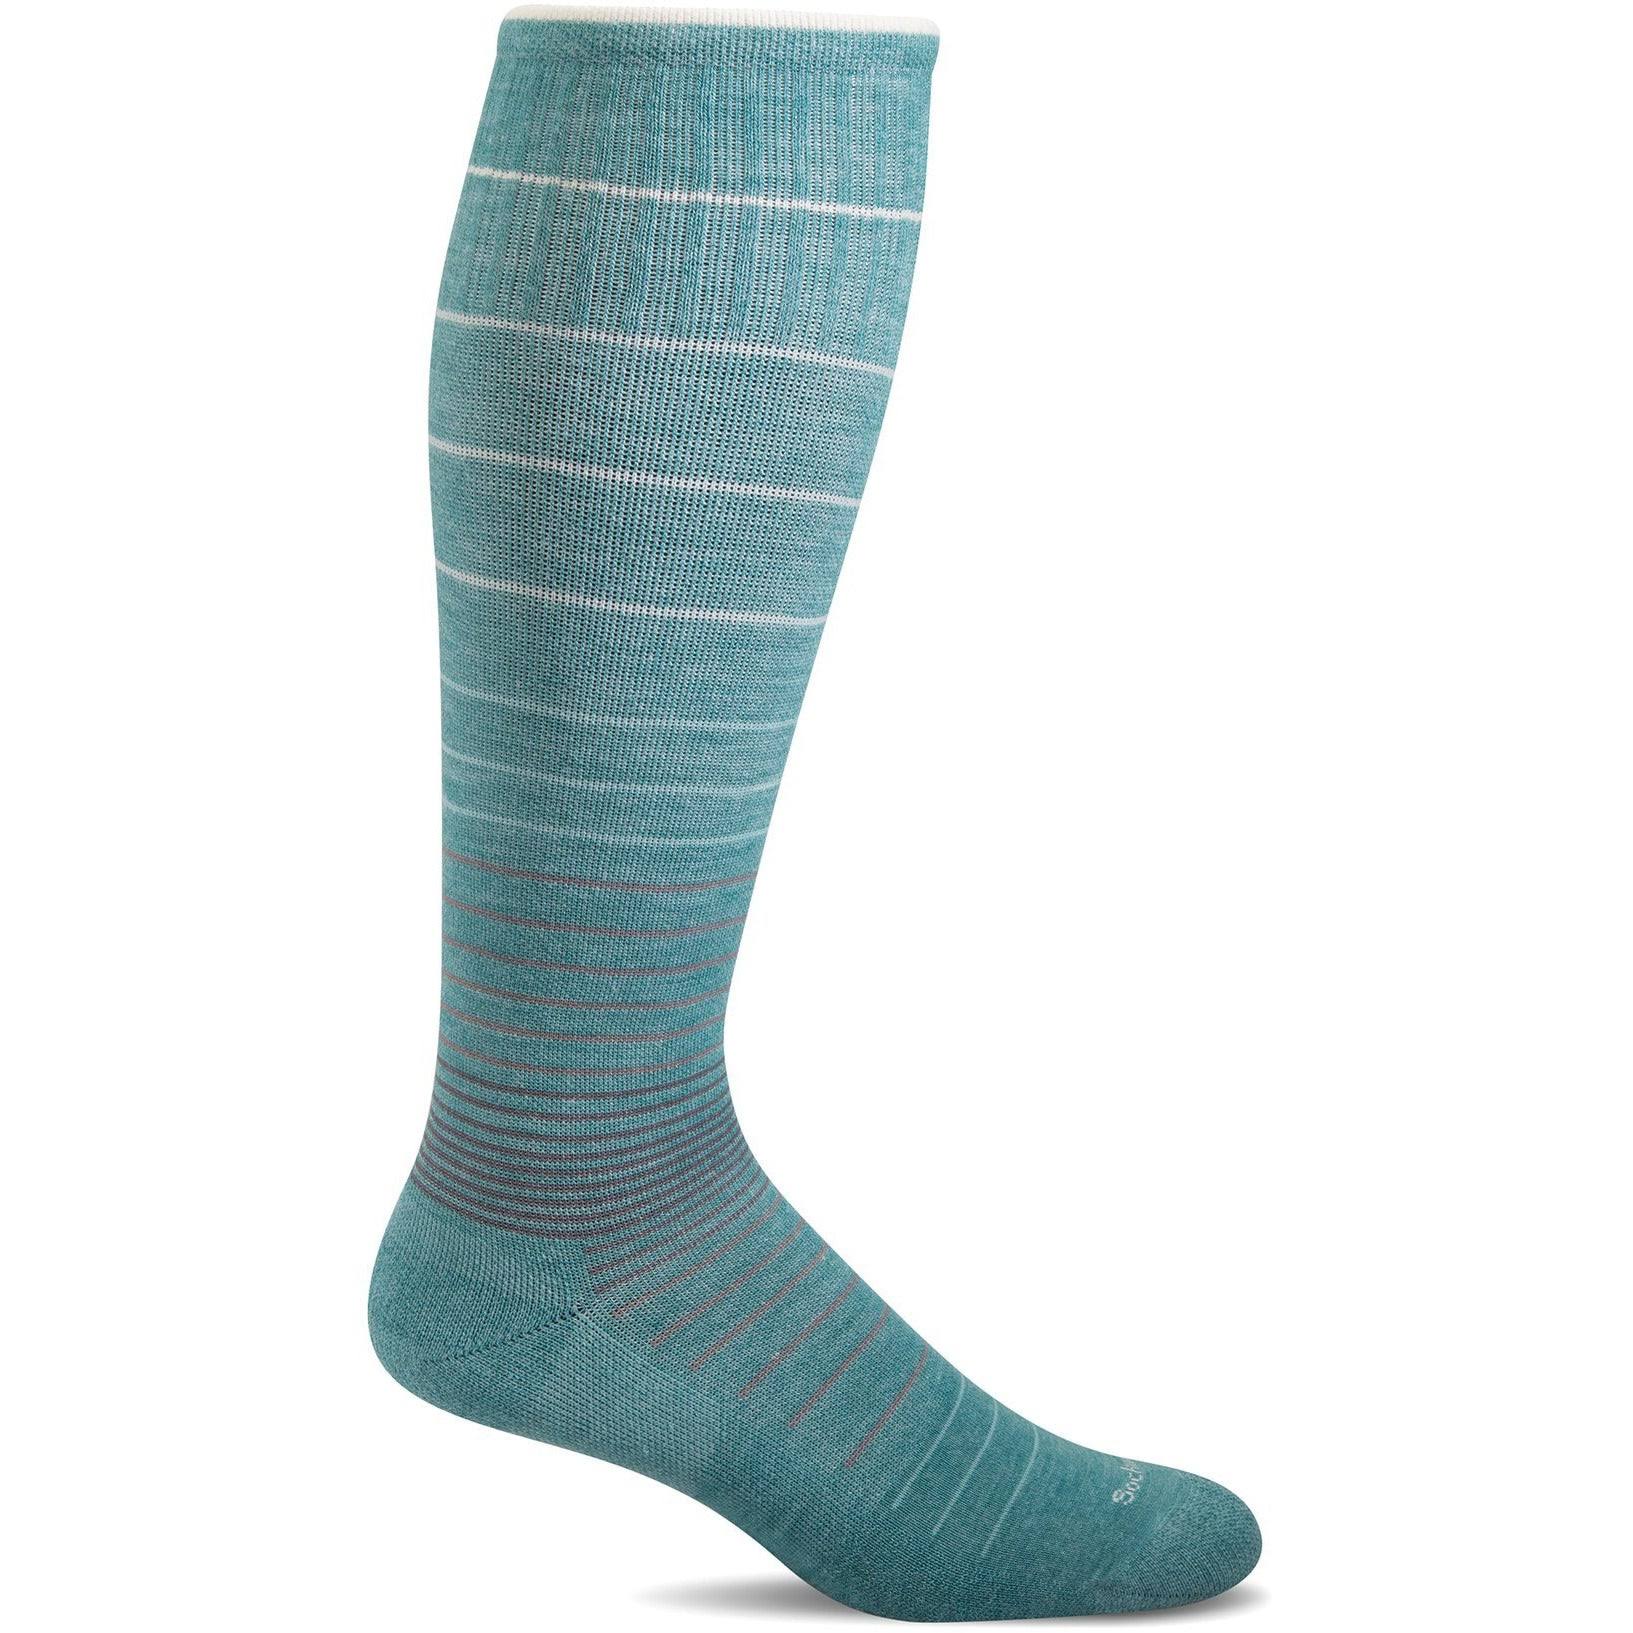 Sockwell Women's Circulator Compression Socks - Blue/Green, Small/Medium